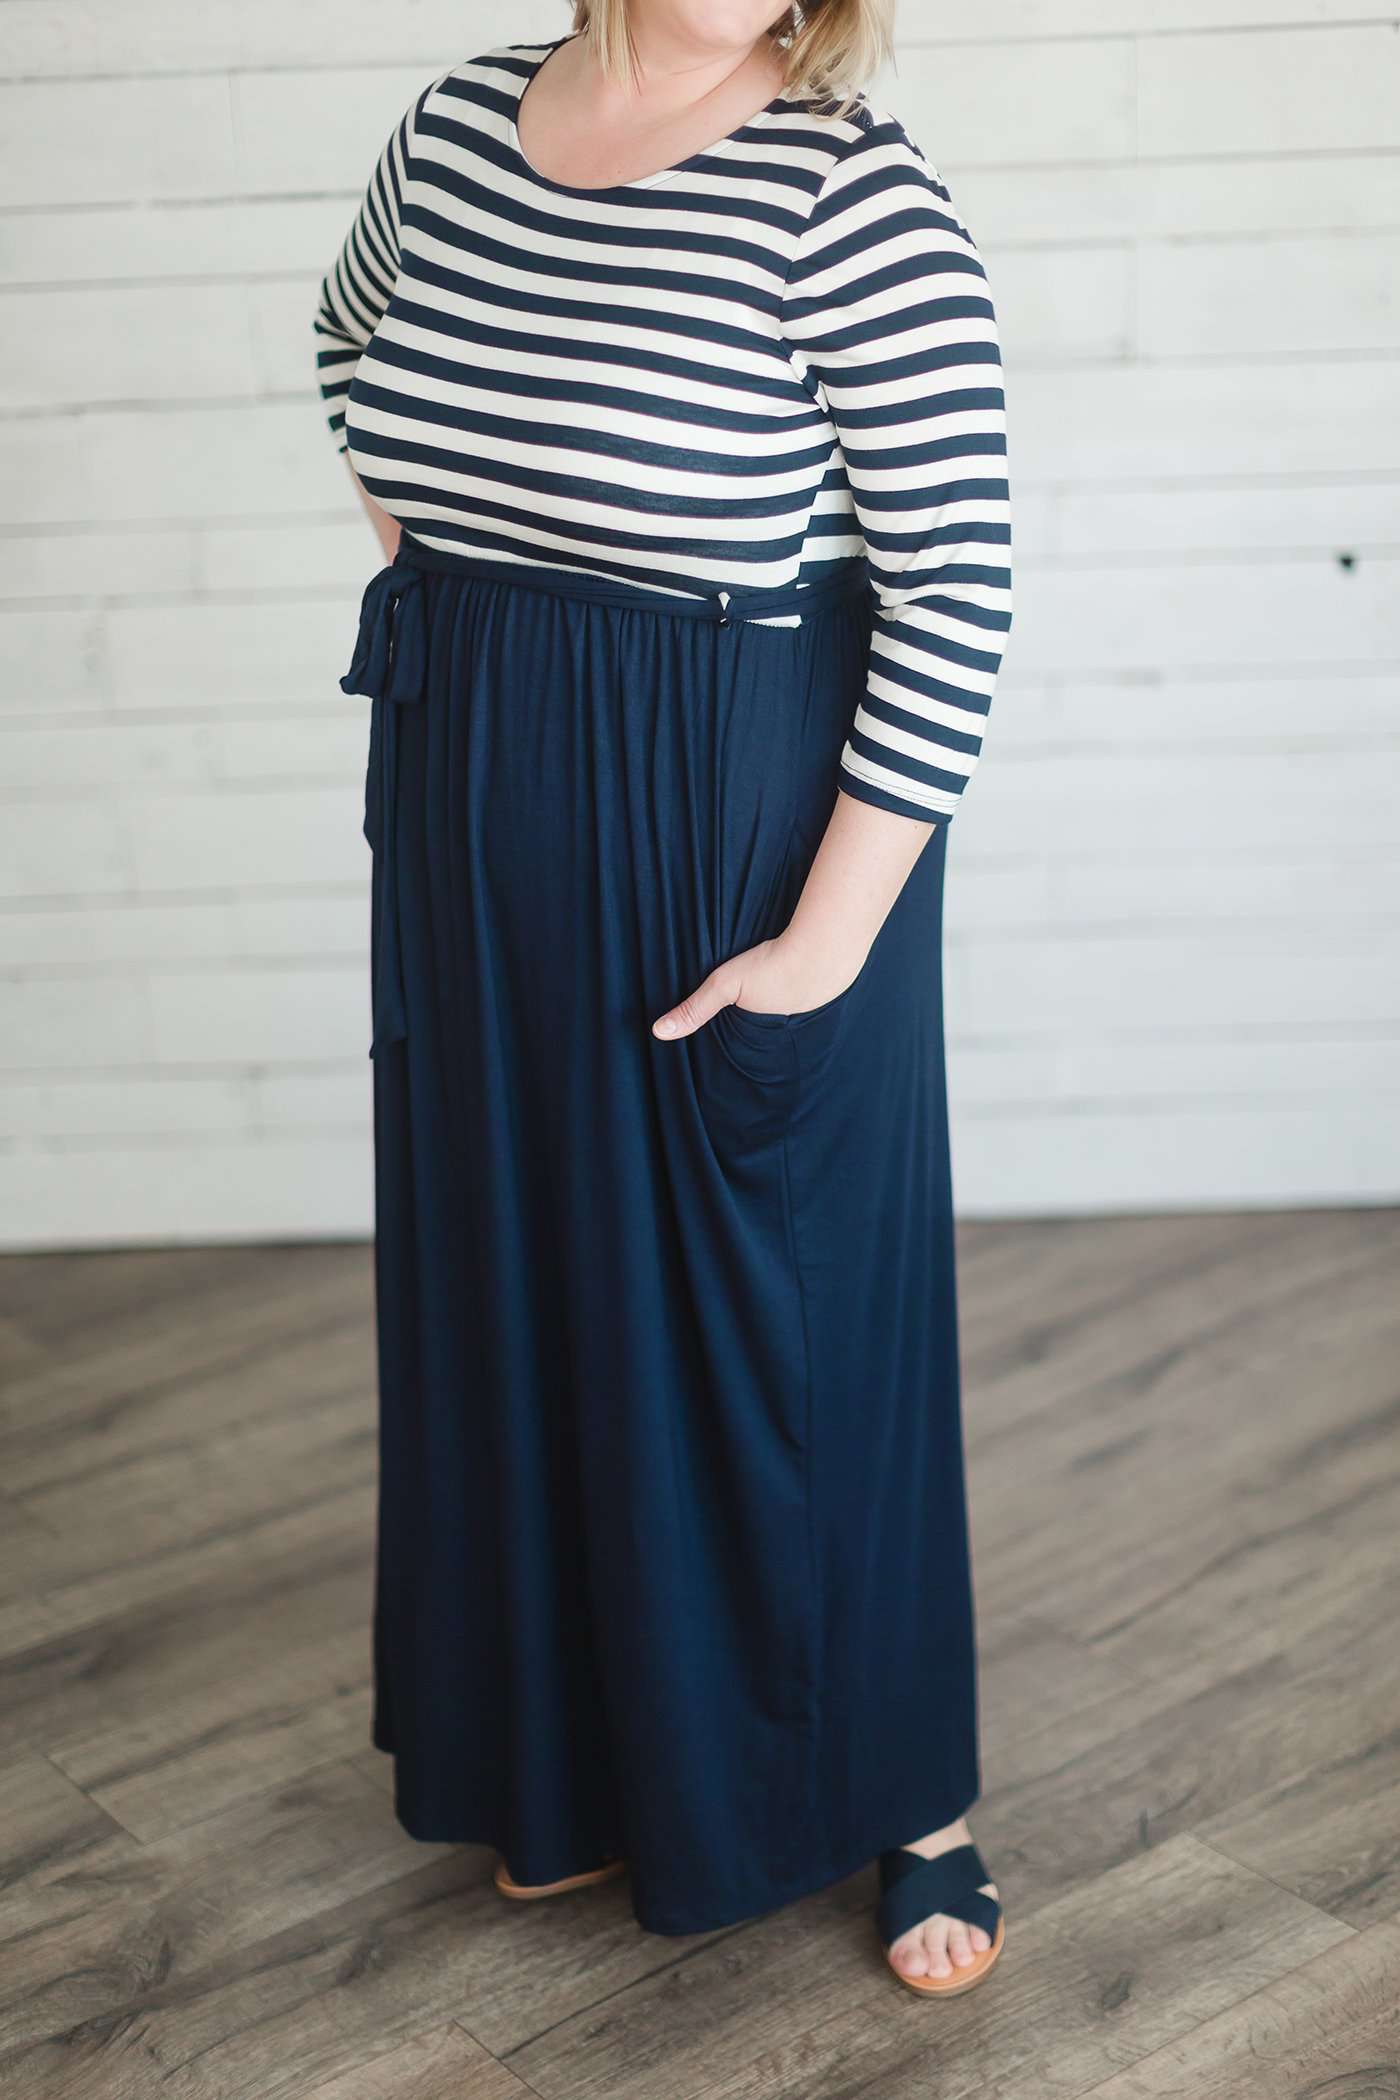 Stripe & Solid Maxi Dress - FINAL SALE Dresses